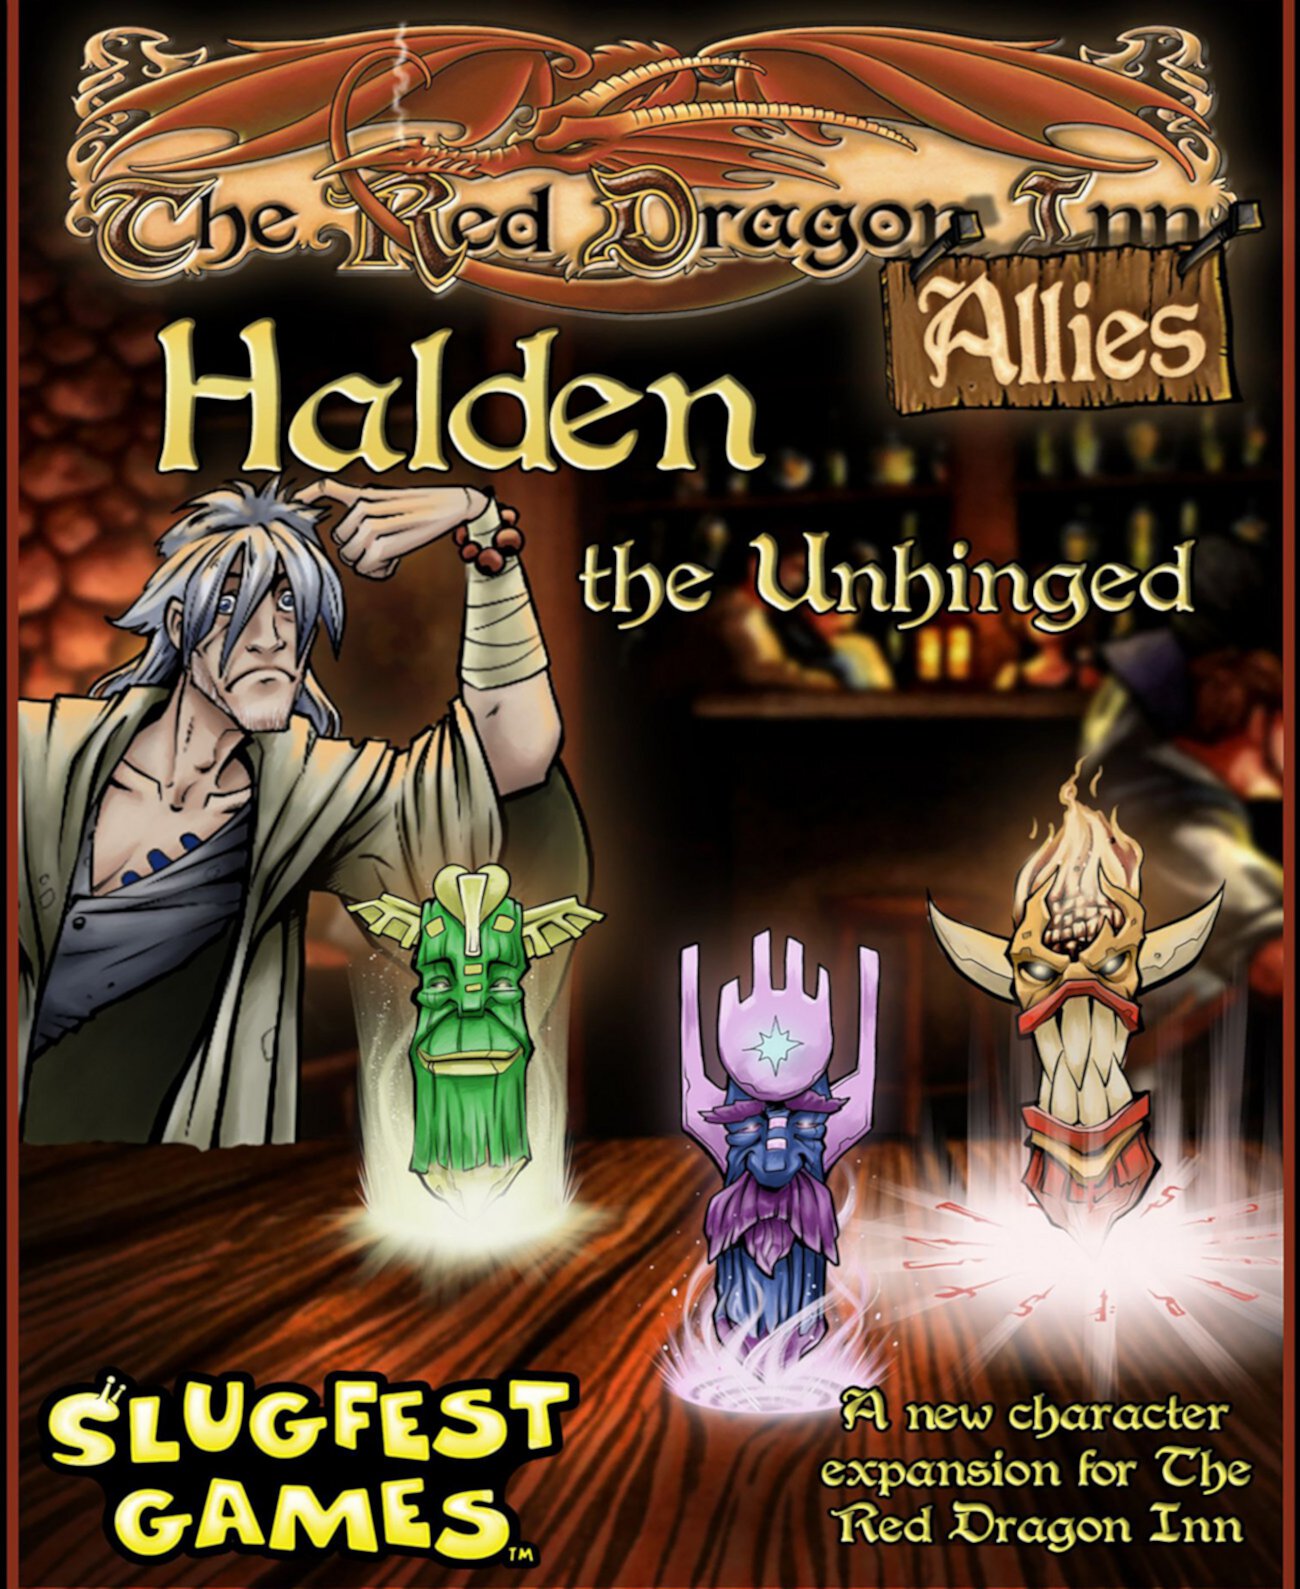 Red Dragon Inn Allies Halden the Unhinged, дополнение Slugfest Games